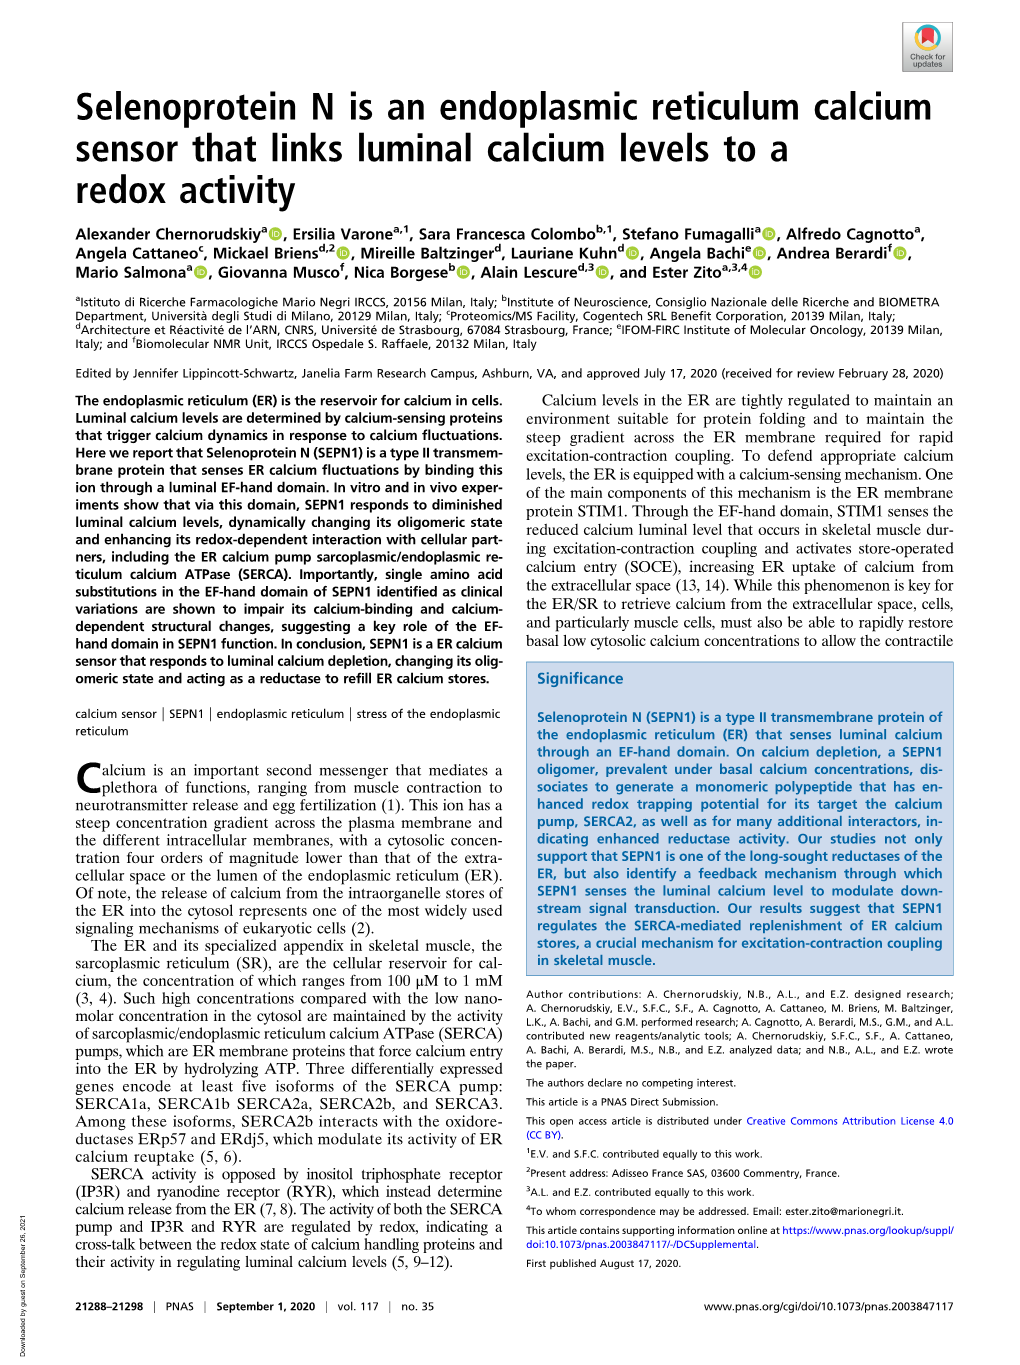 Selenoprotein N Is an Endoplasmic Reticulum Calcium Sensor That Links Luminal Calcium Levels to a Redox Activity